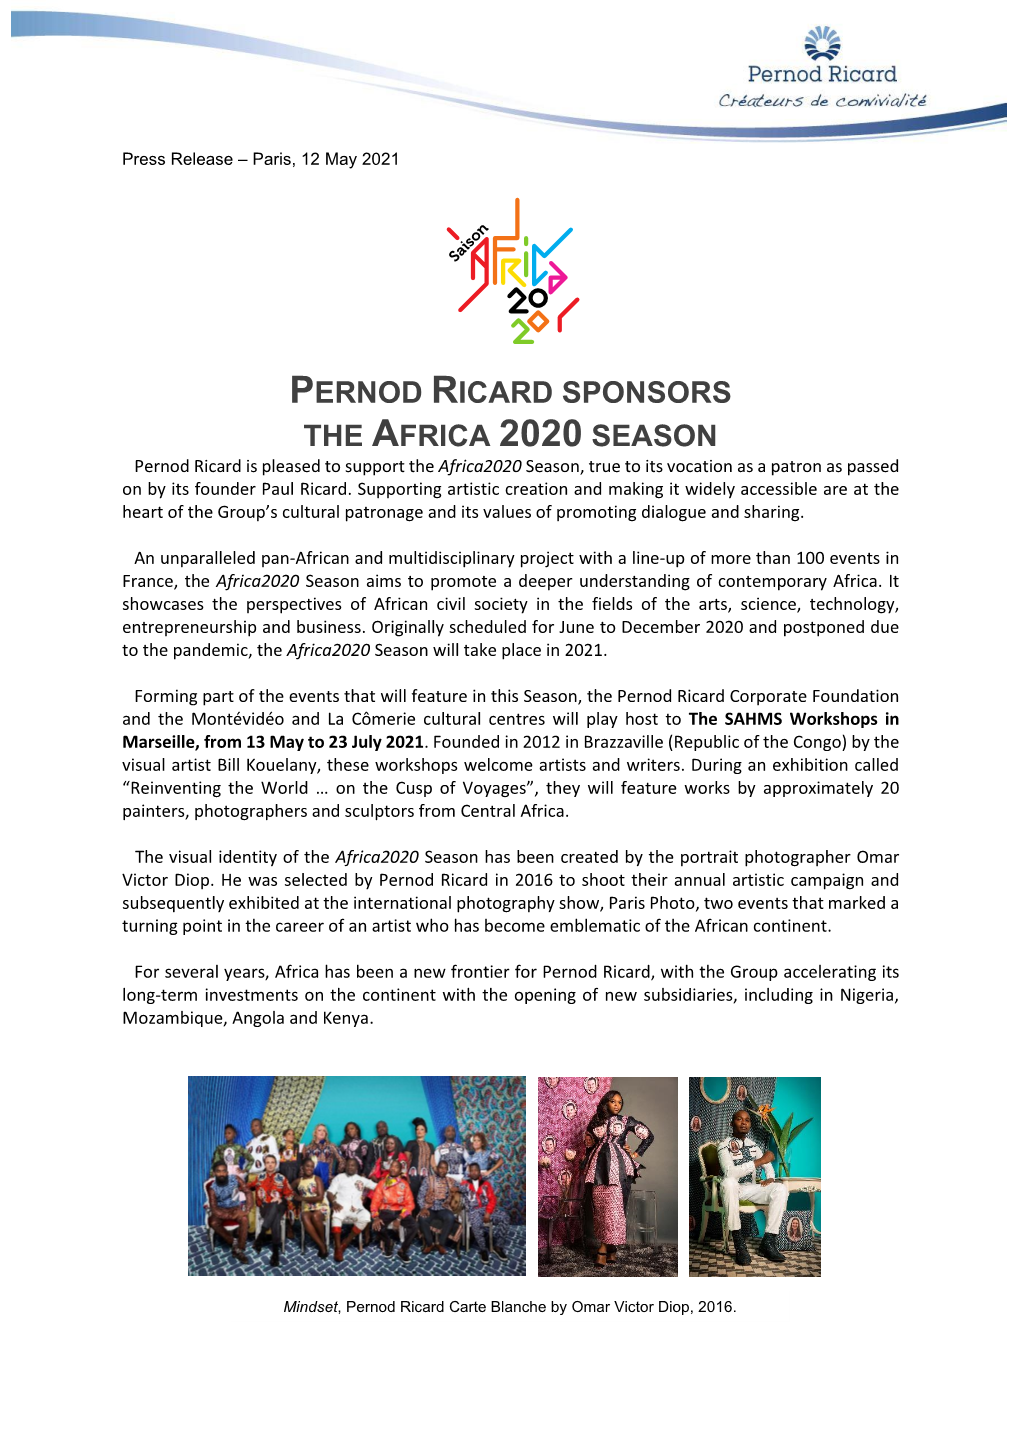 Pernod Ricard Sponsors the Africa 2020 Season